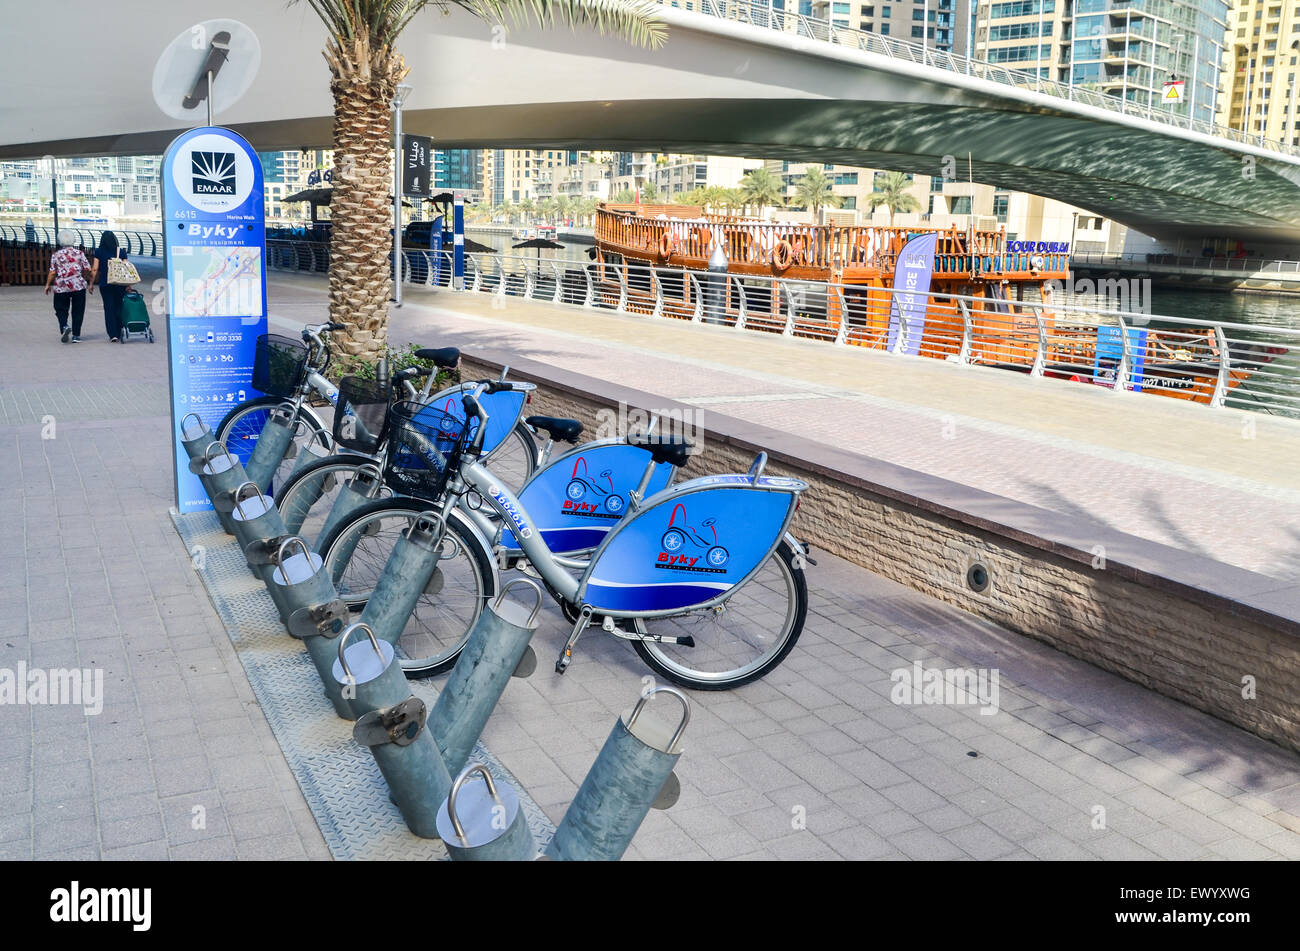 Bikes for rent Byky at the Dubai Marina, UAE Stock Photo